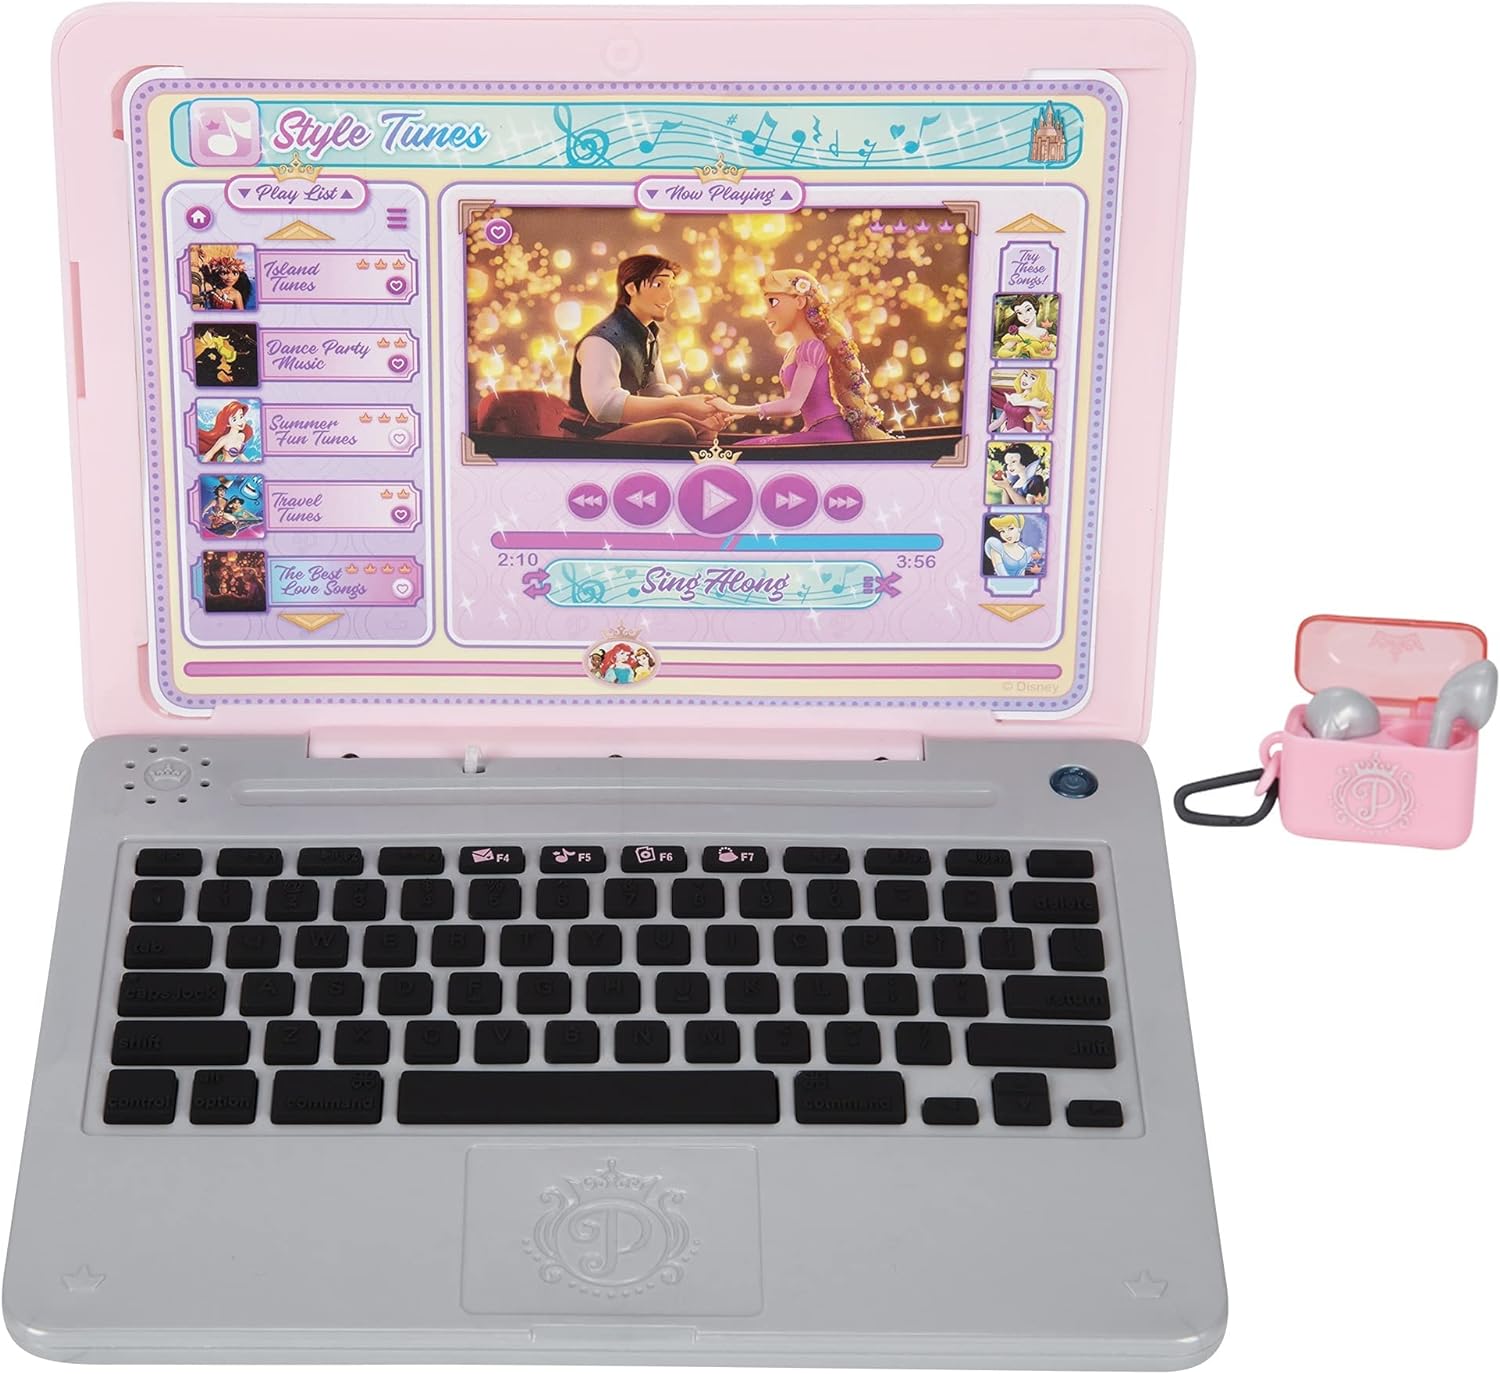 Disney Princess Laptop Review